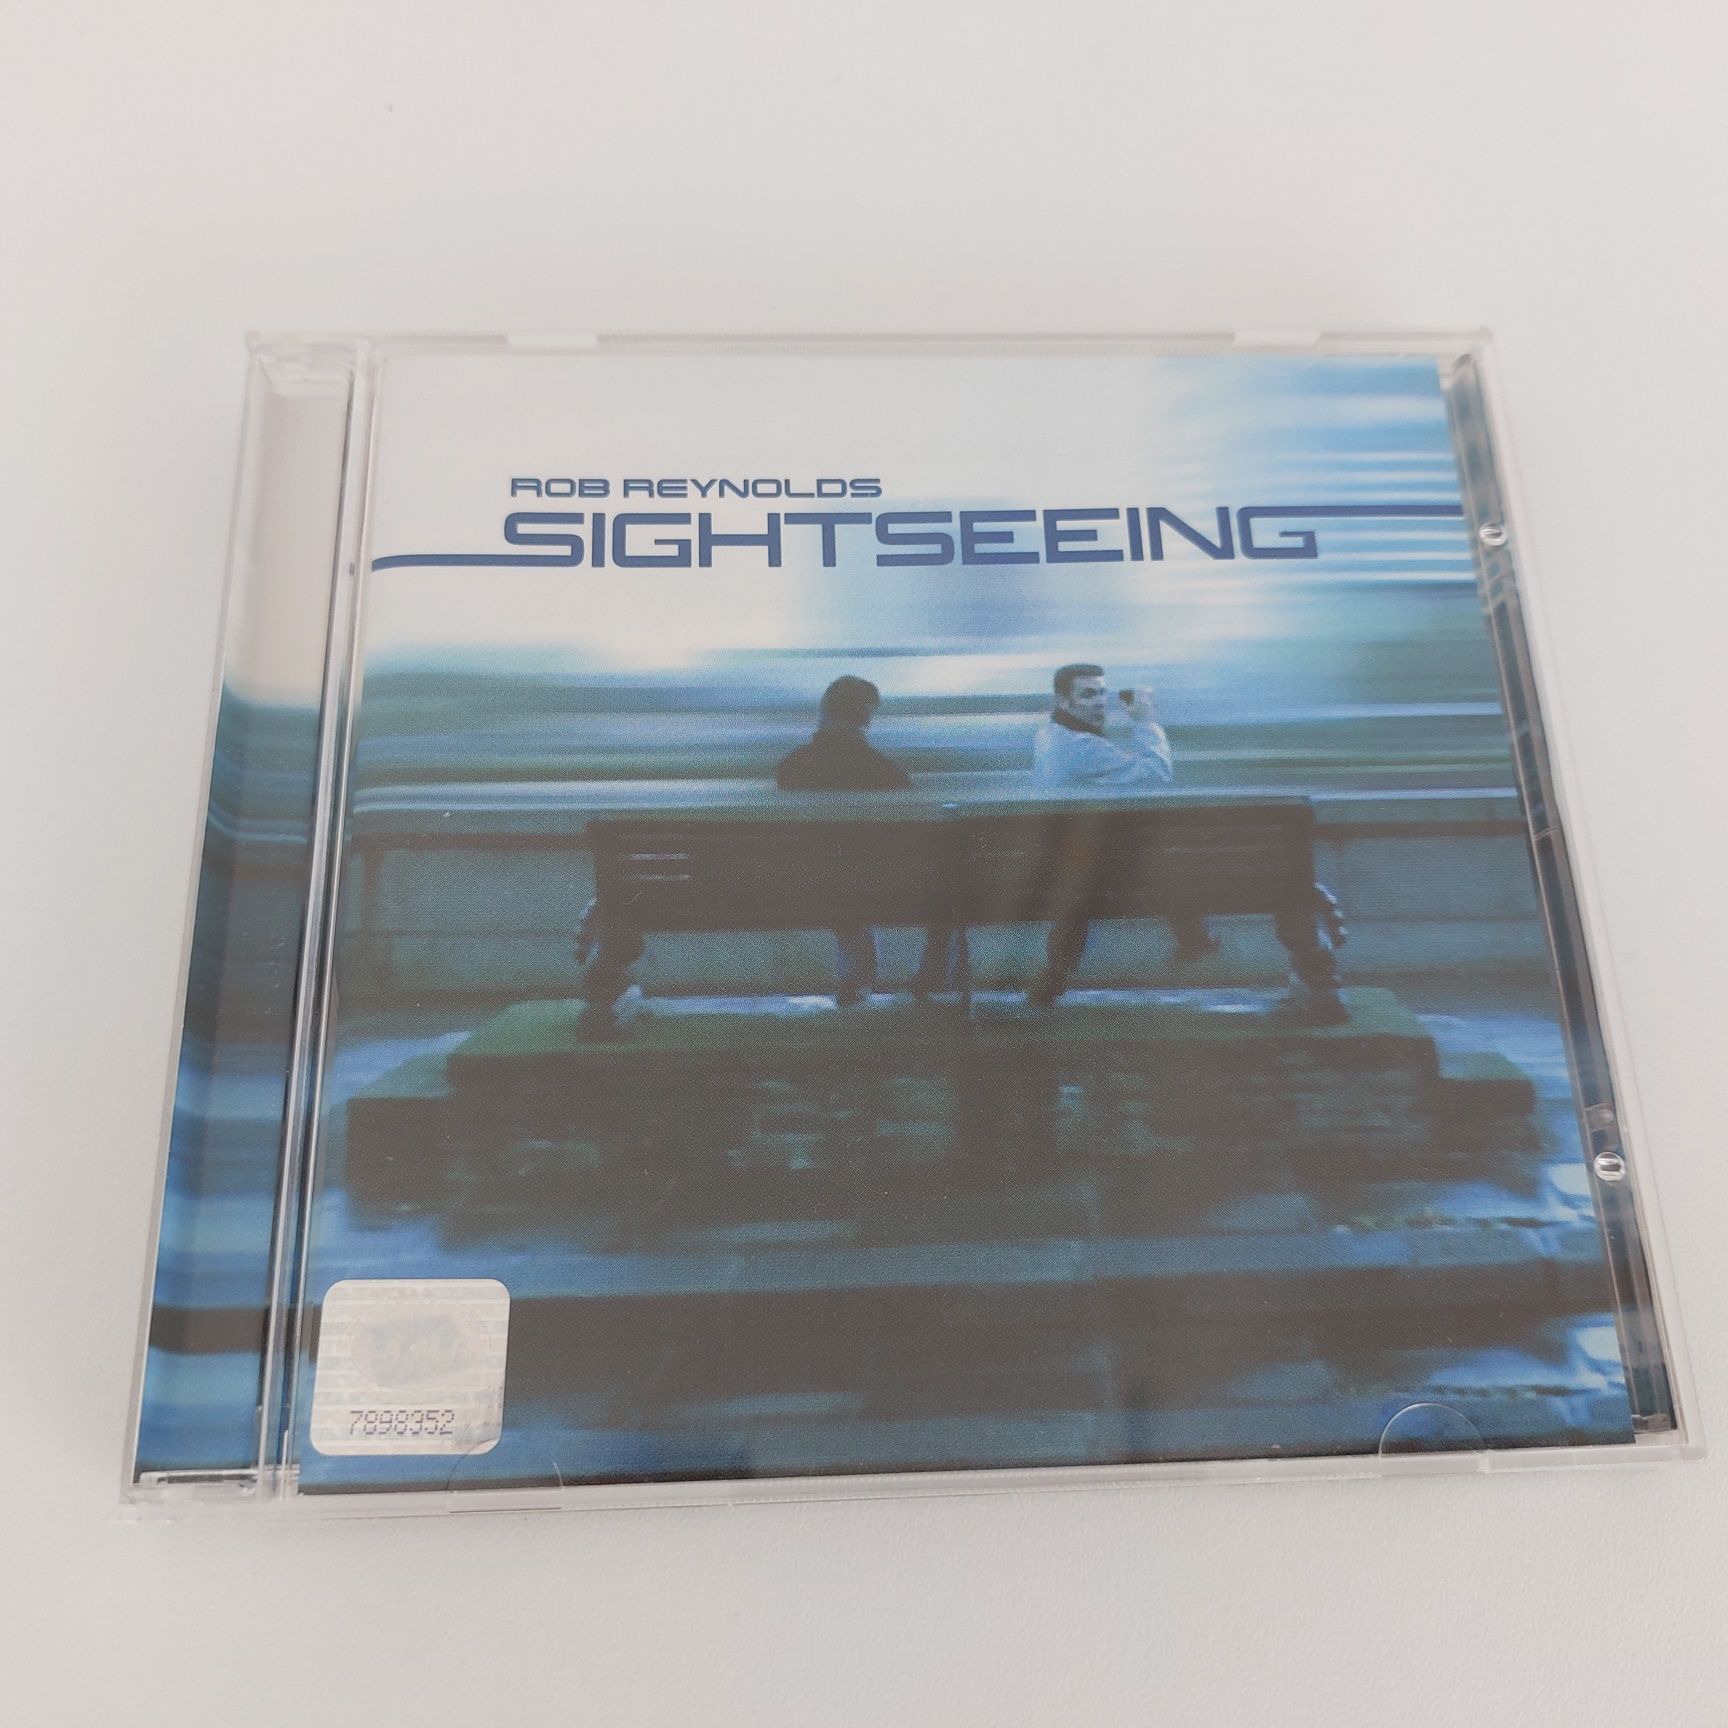 Rob Reynolds - Sightseeing - Audio CD 
Като ново.